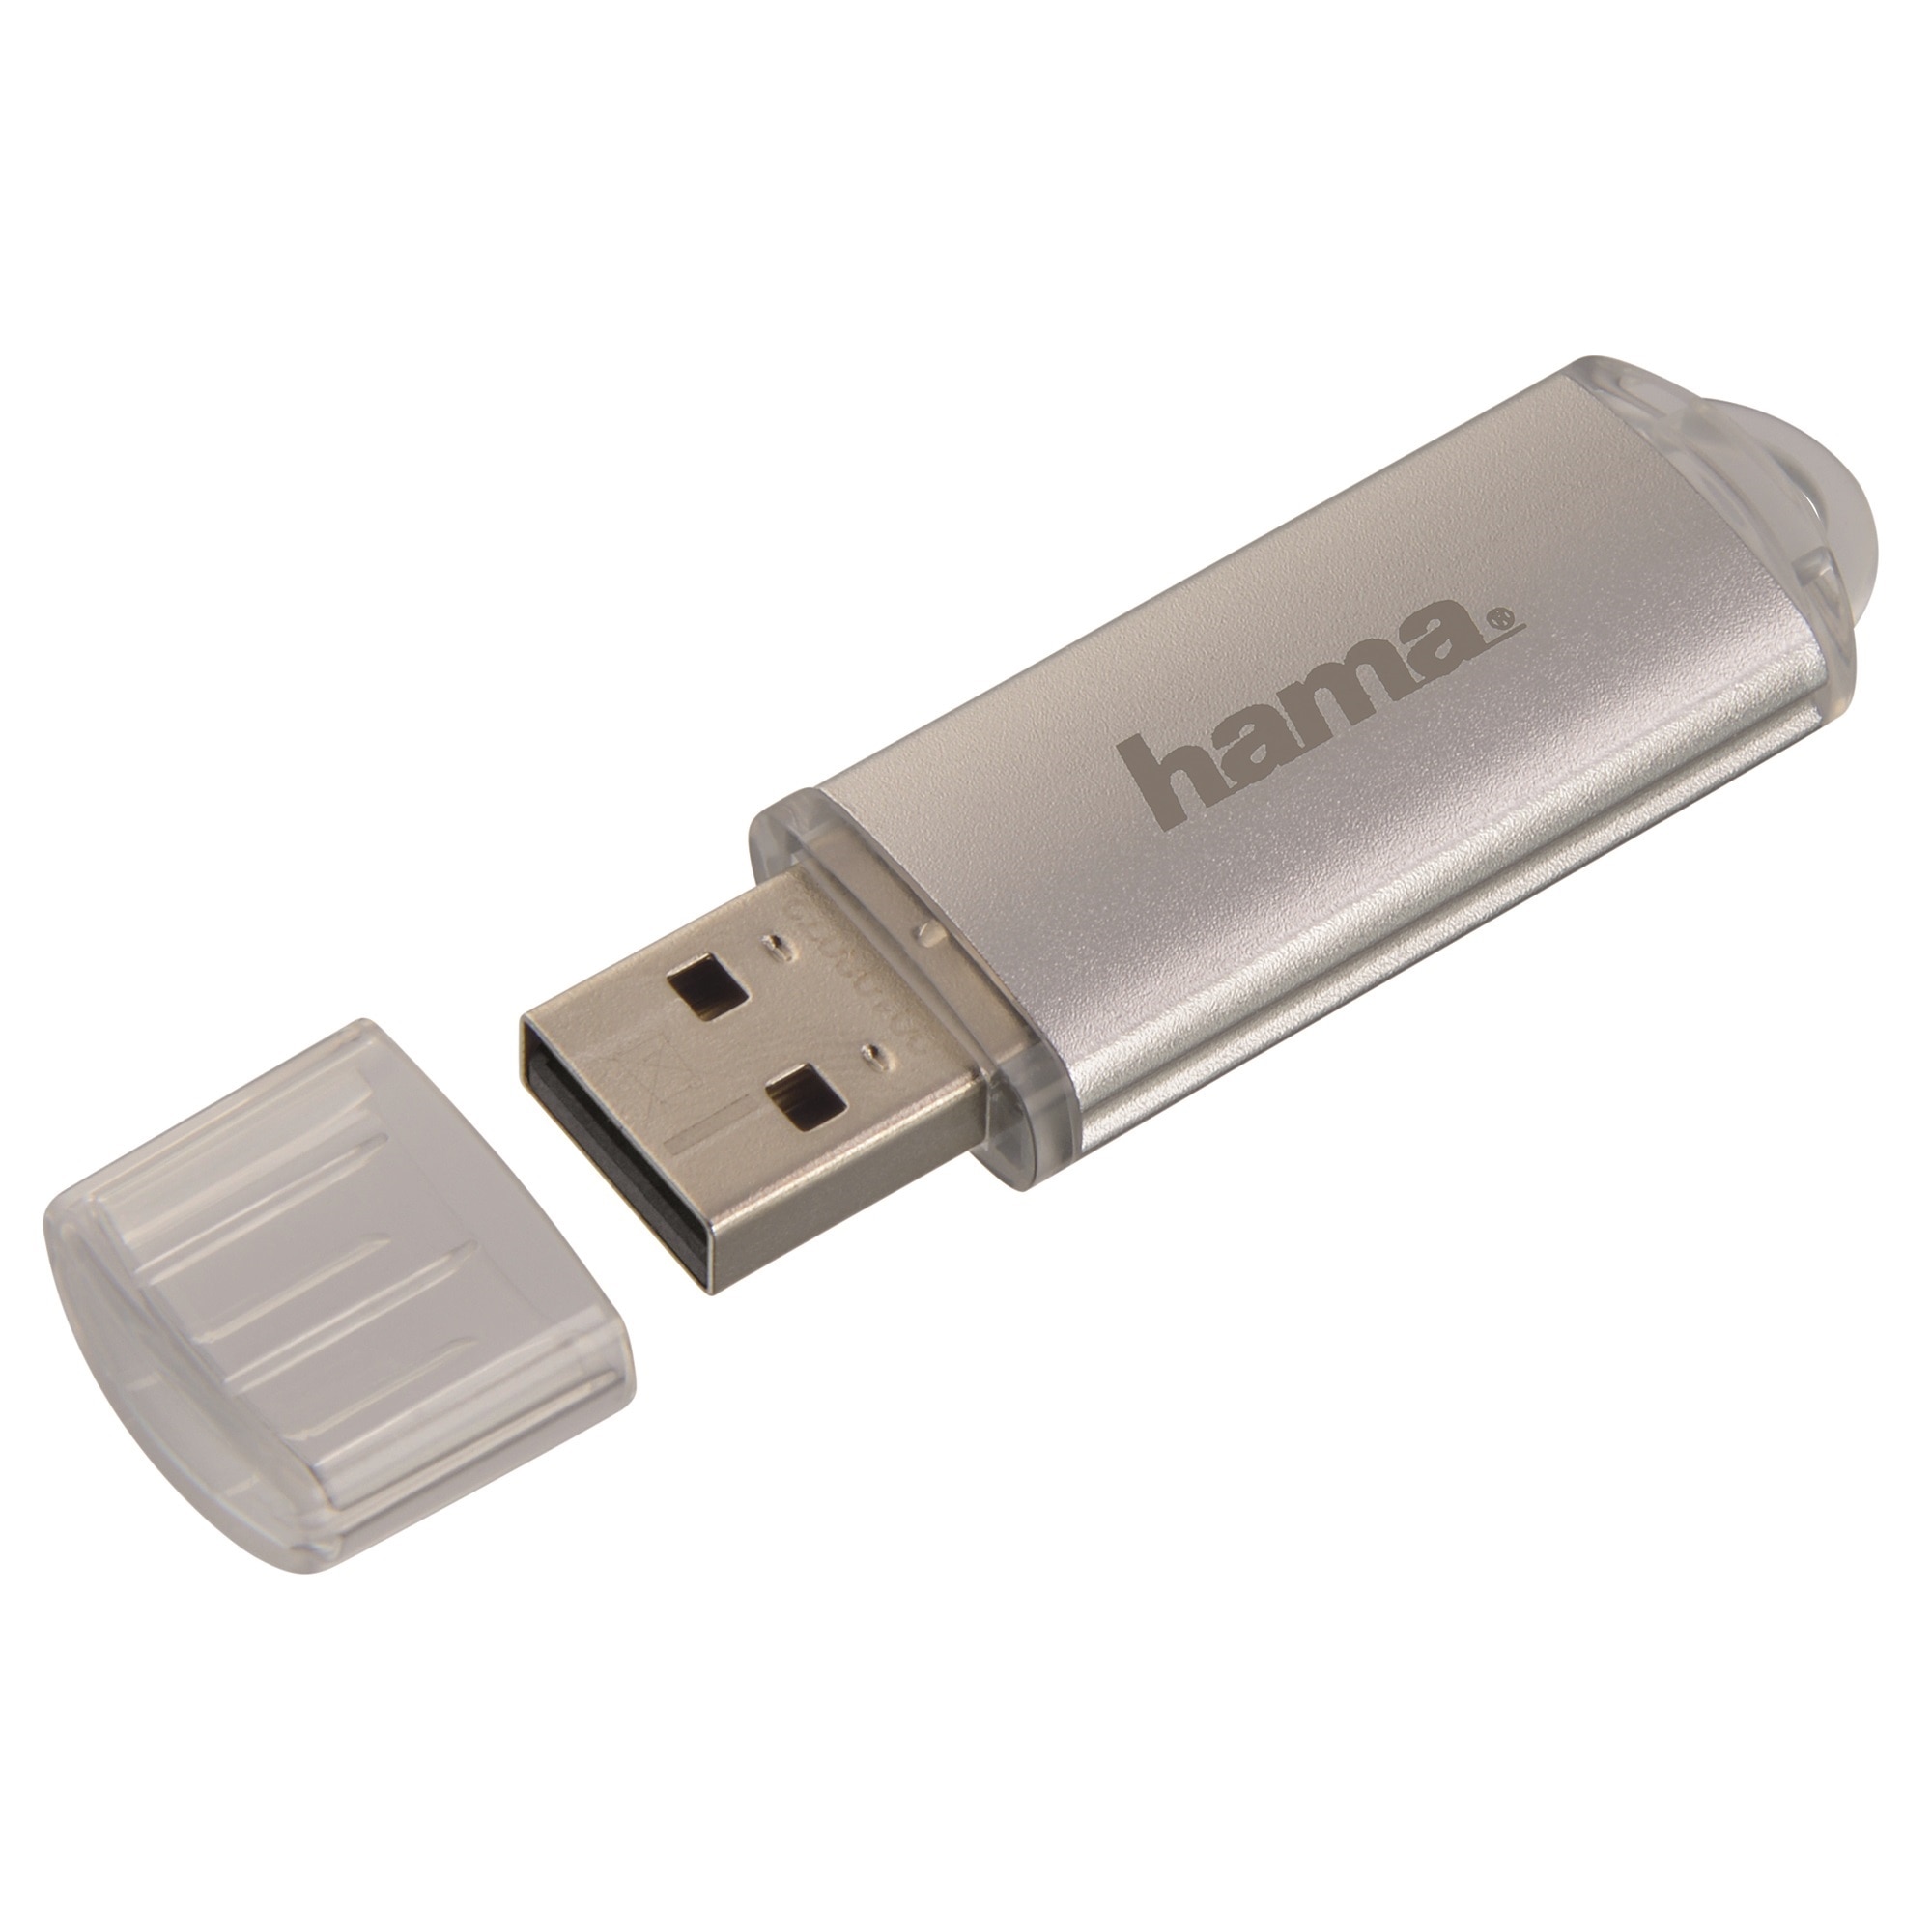 Usb 128 гб купить. Флешка 128 ГБ. Hama 128gb. Флешка Hama 16 g. USB Stick.